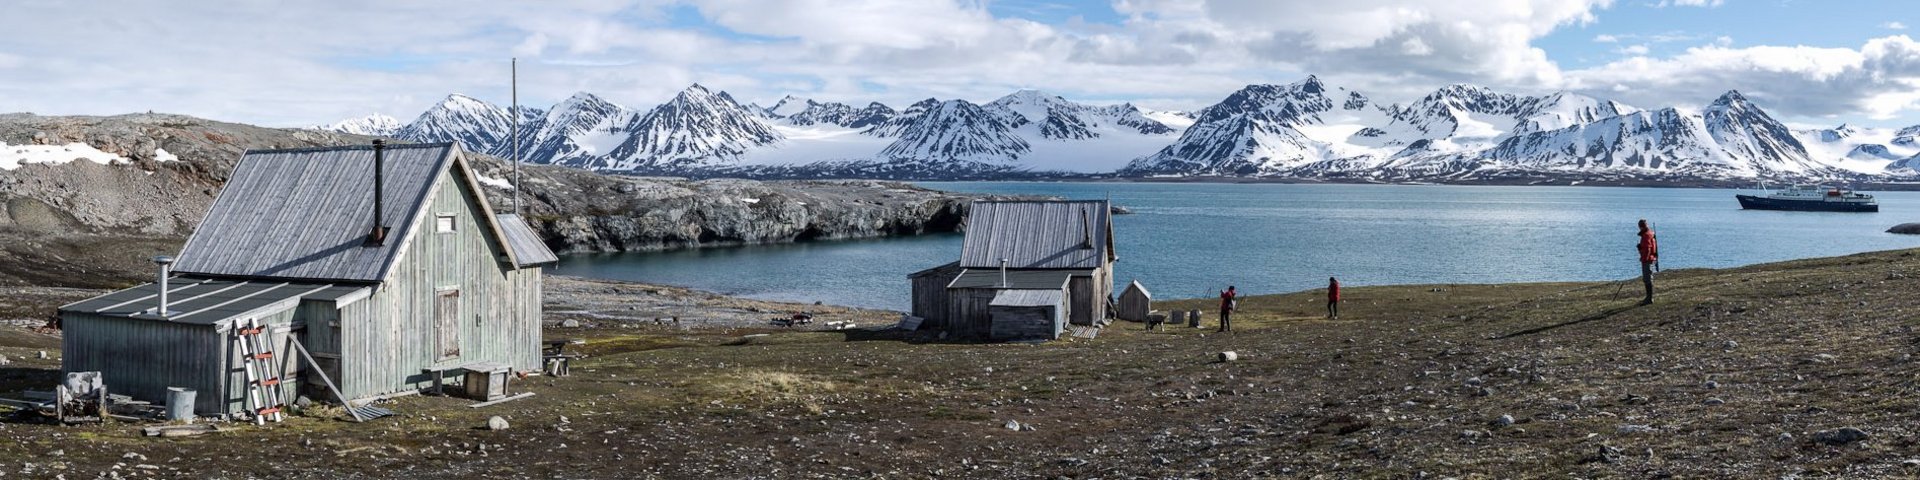 Alte Trapperhütte in Spitzbergen